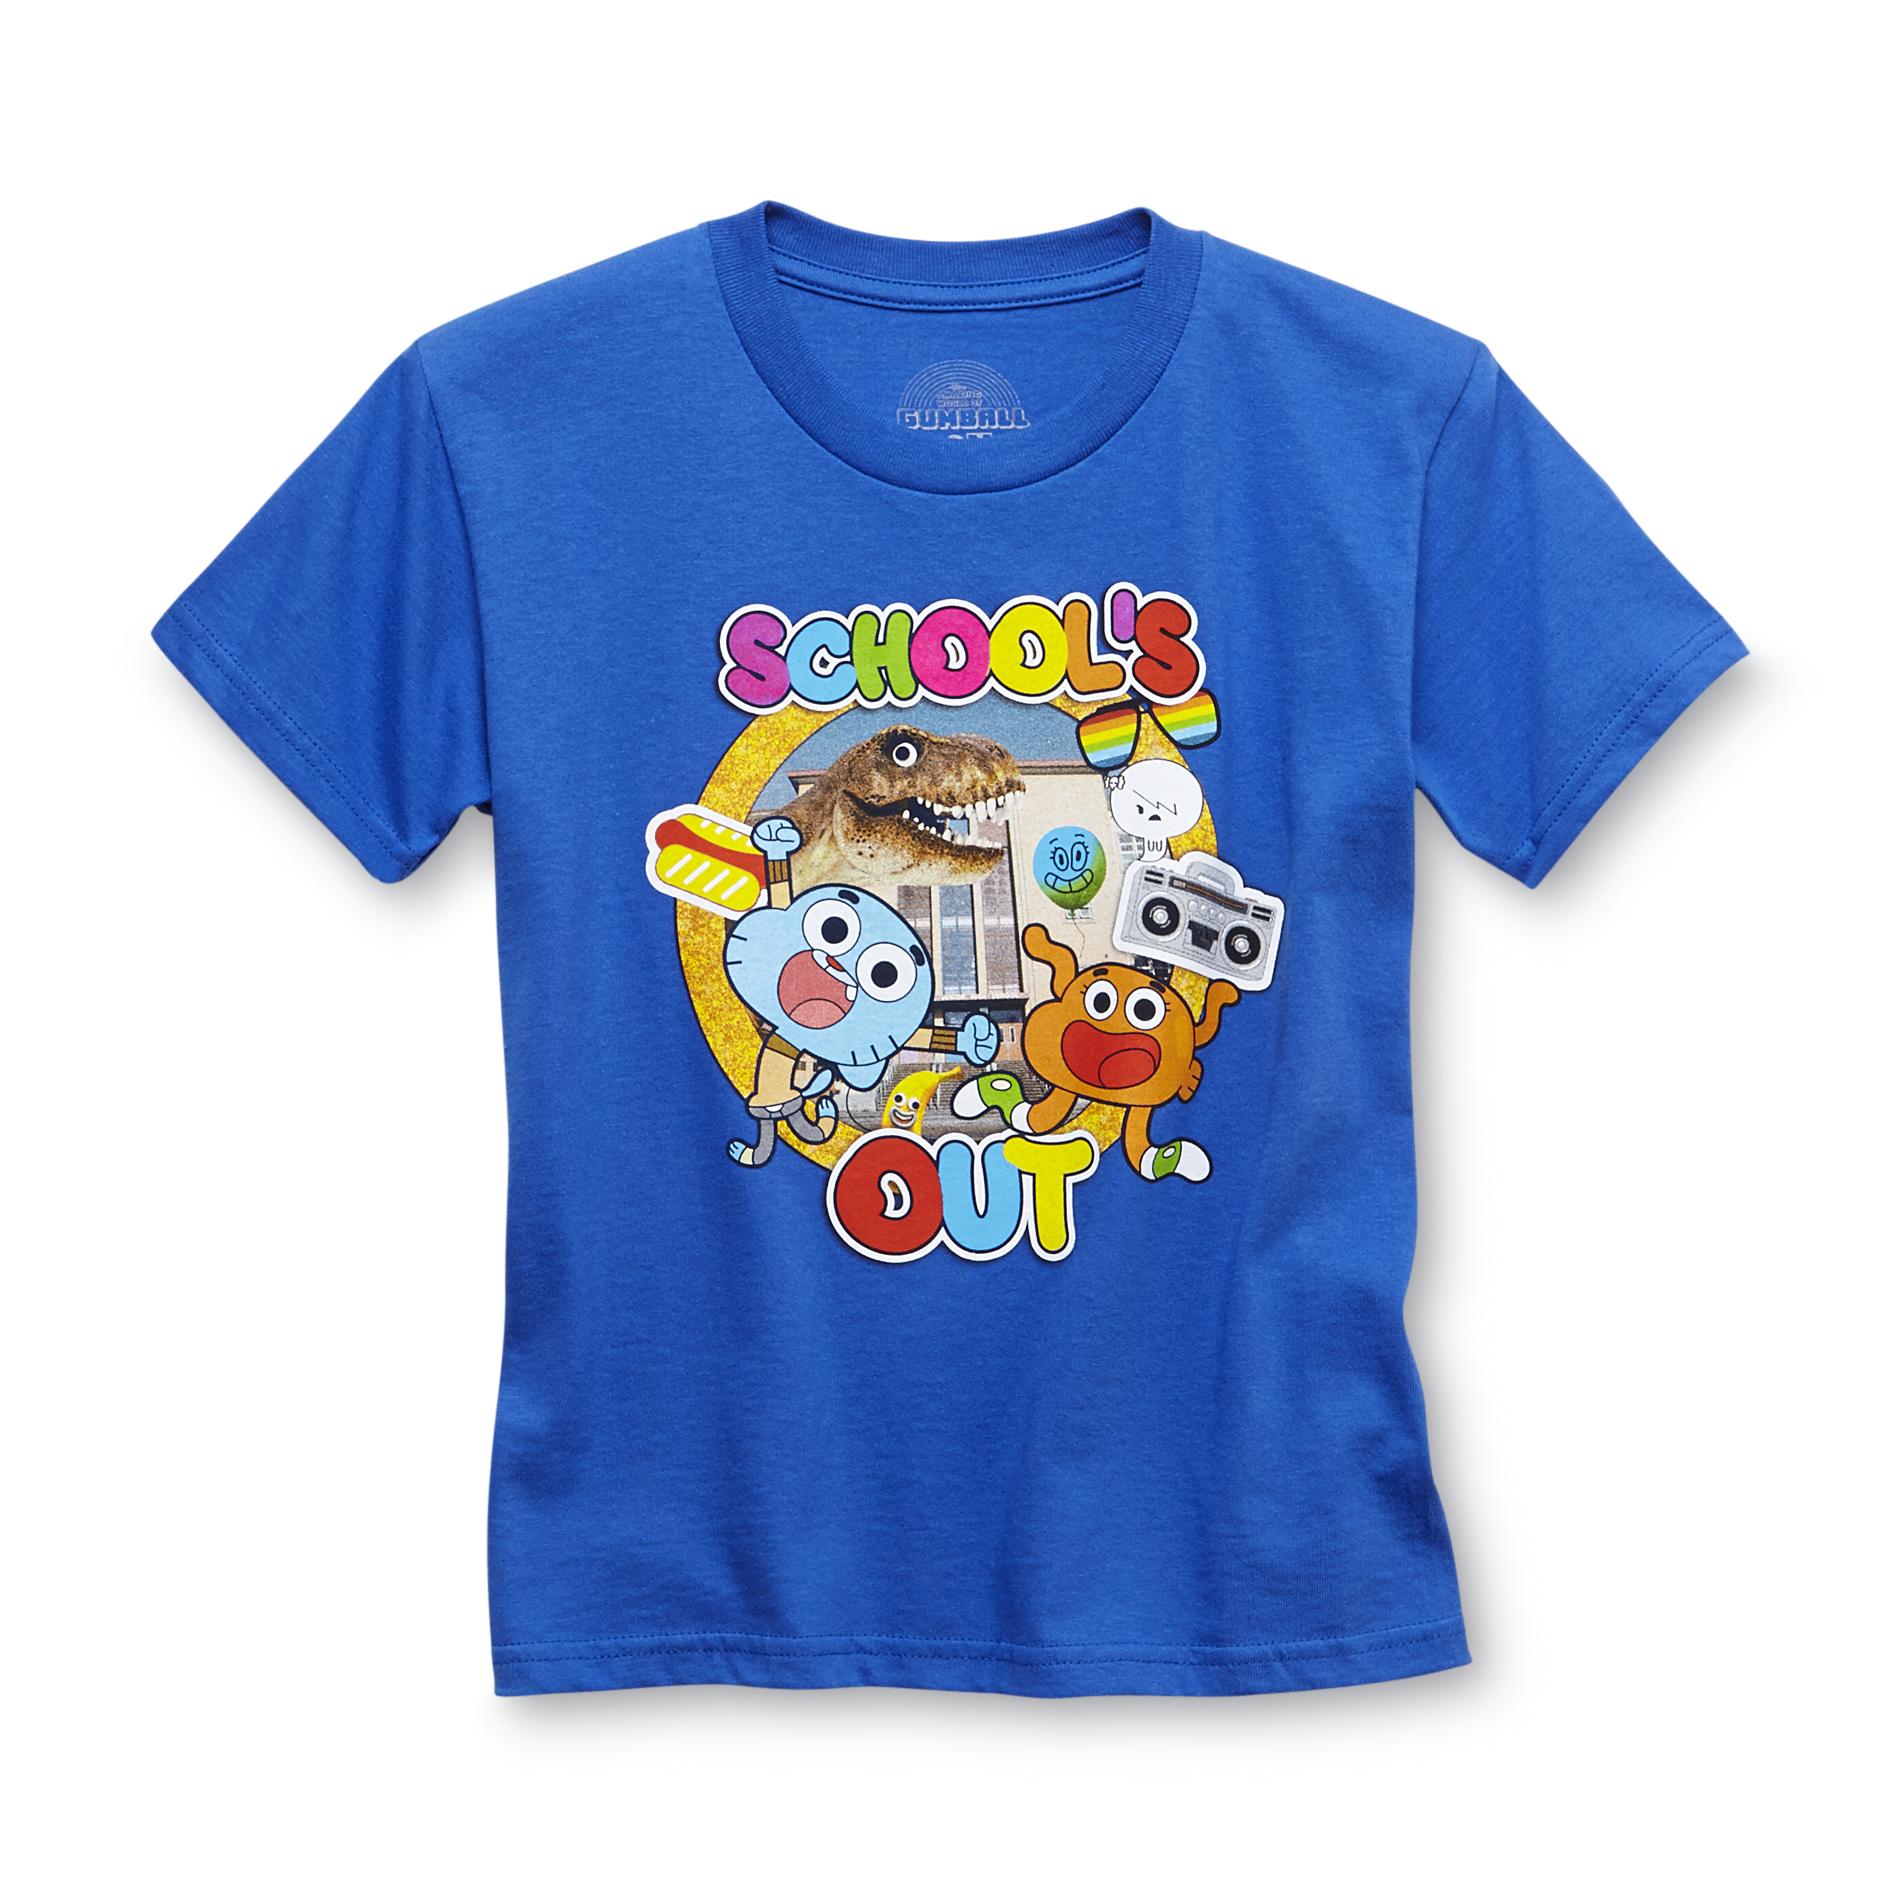 Cartoon Network Boy's Graphic T-Shirt - Gumball